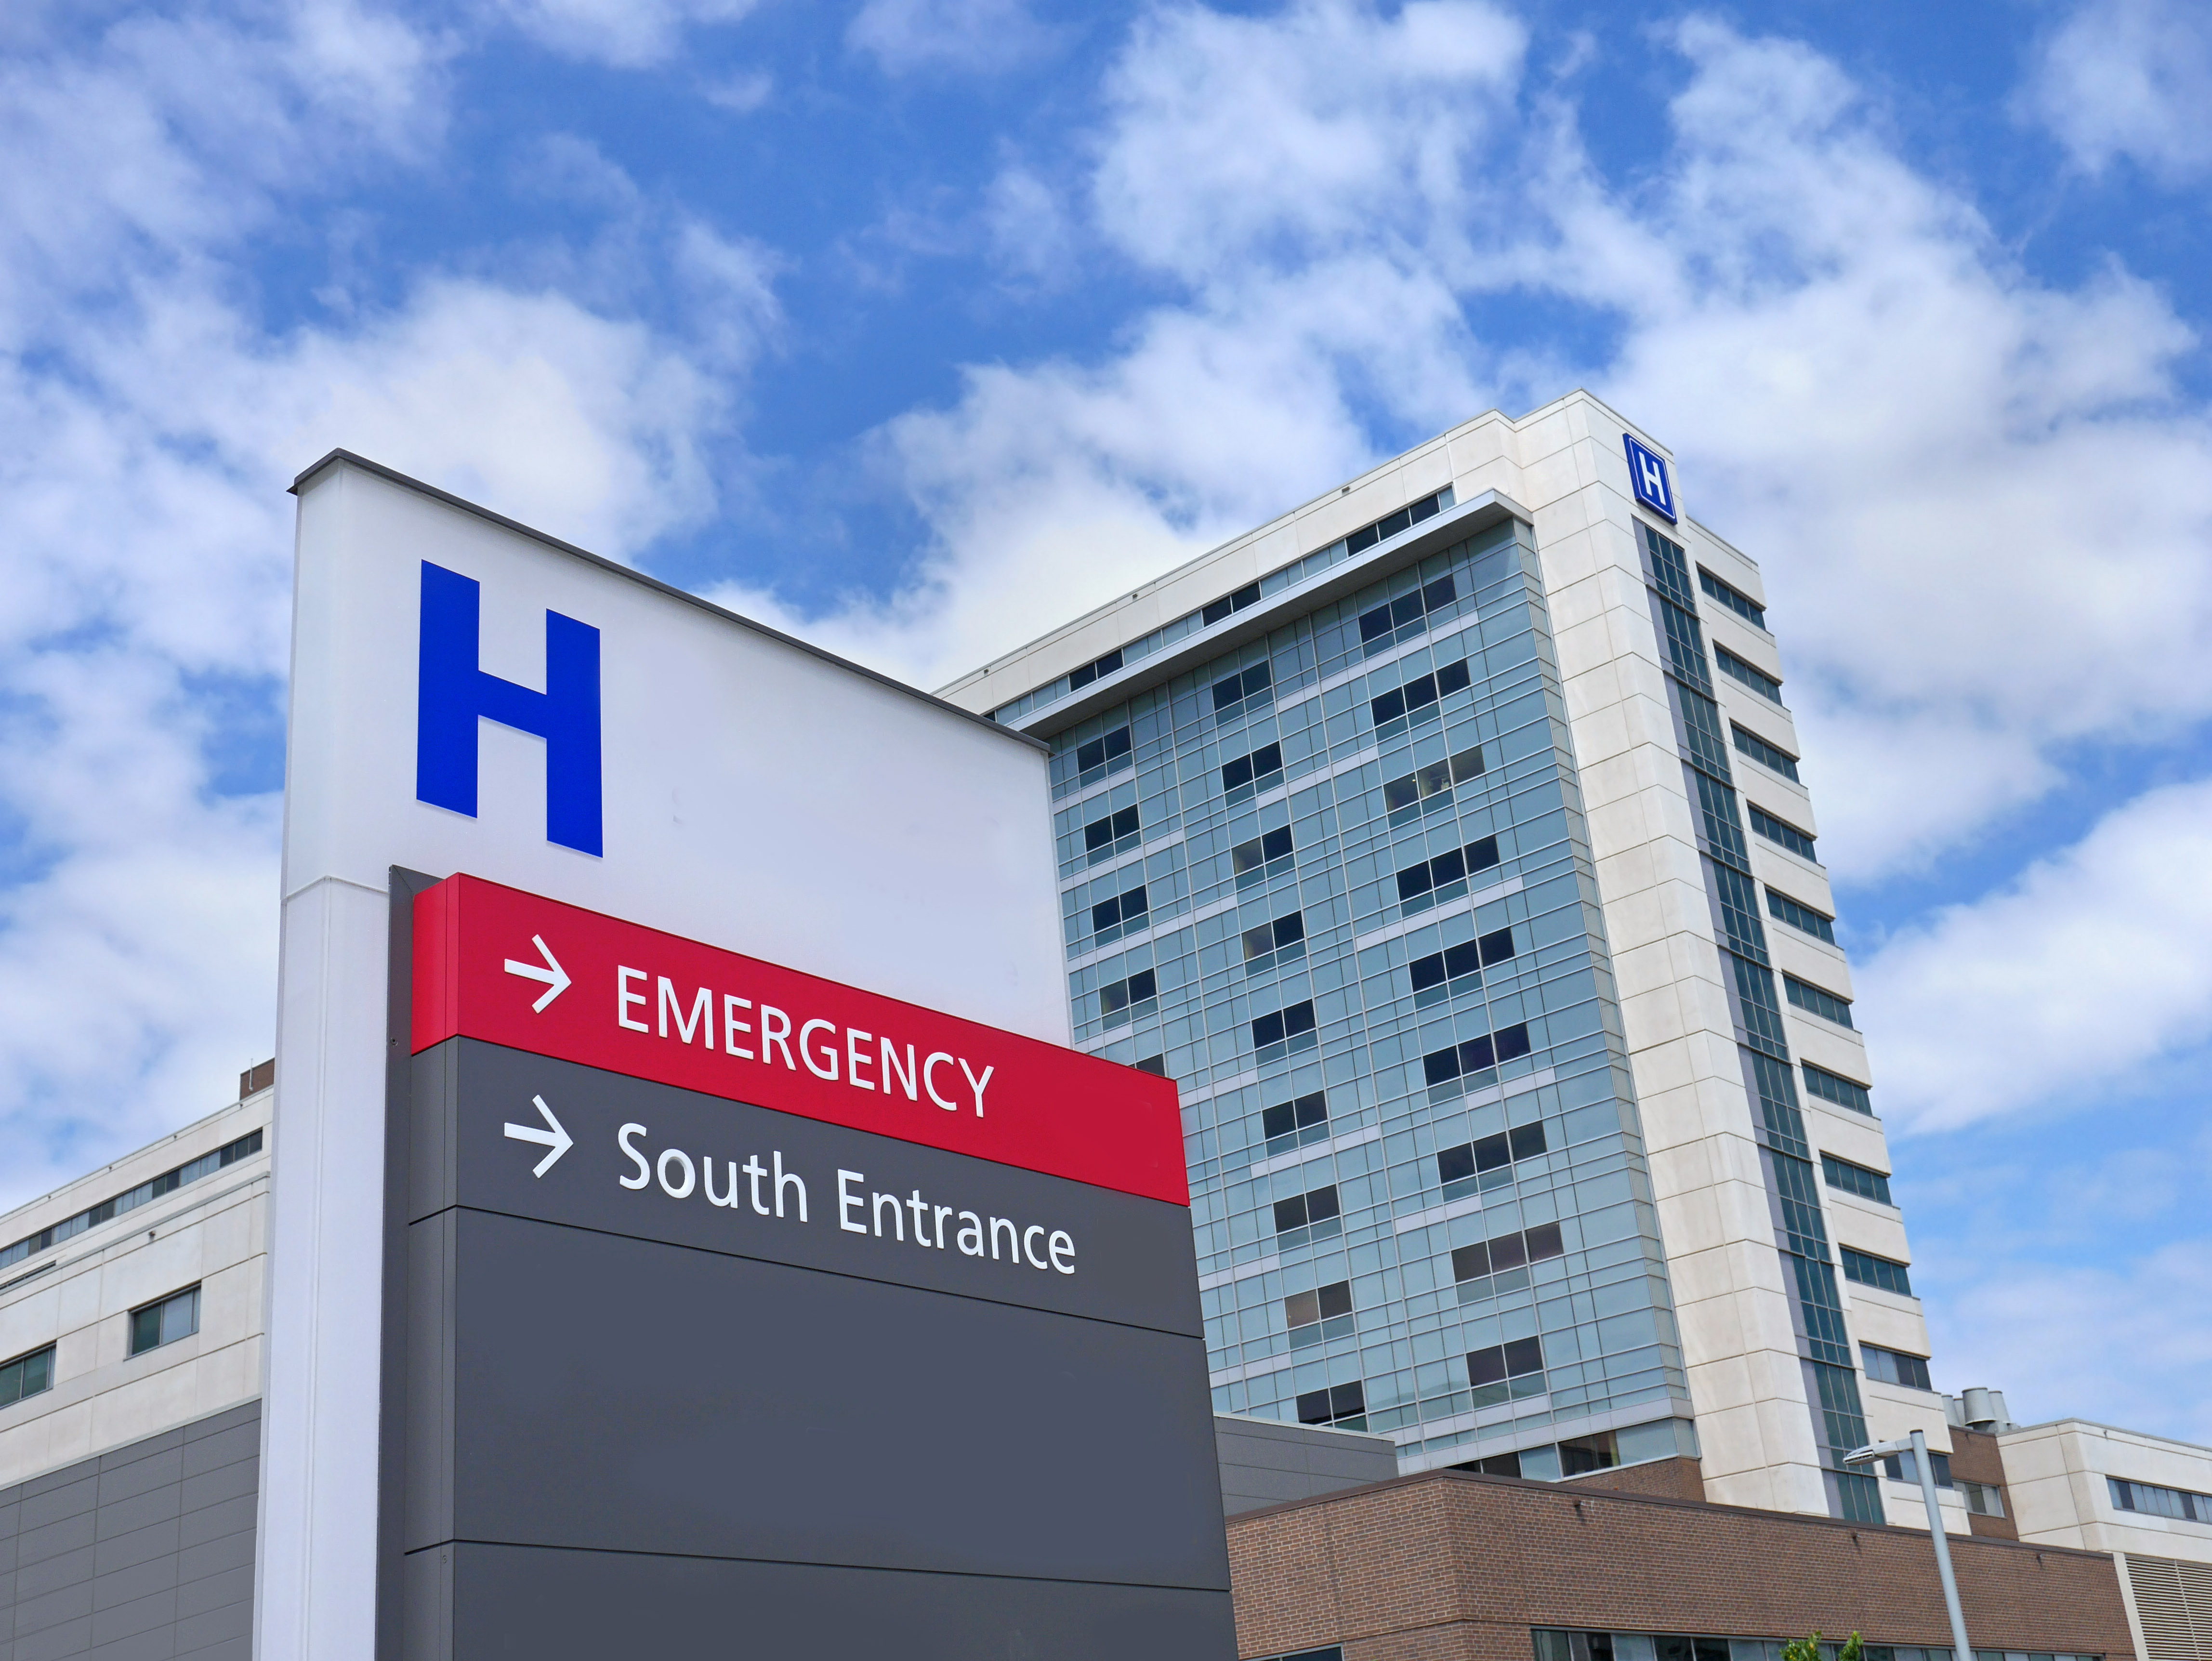 Stock photo of a hospital exterior